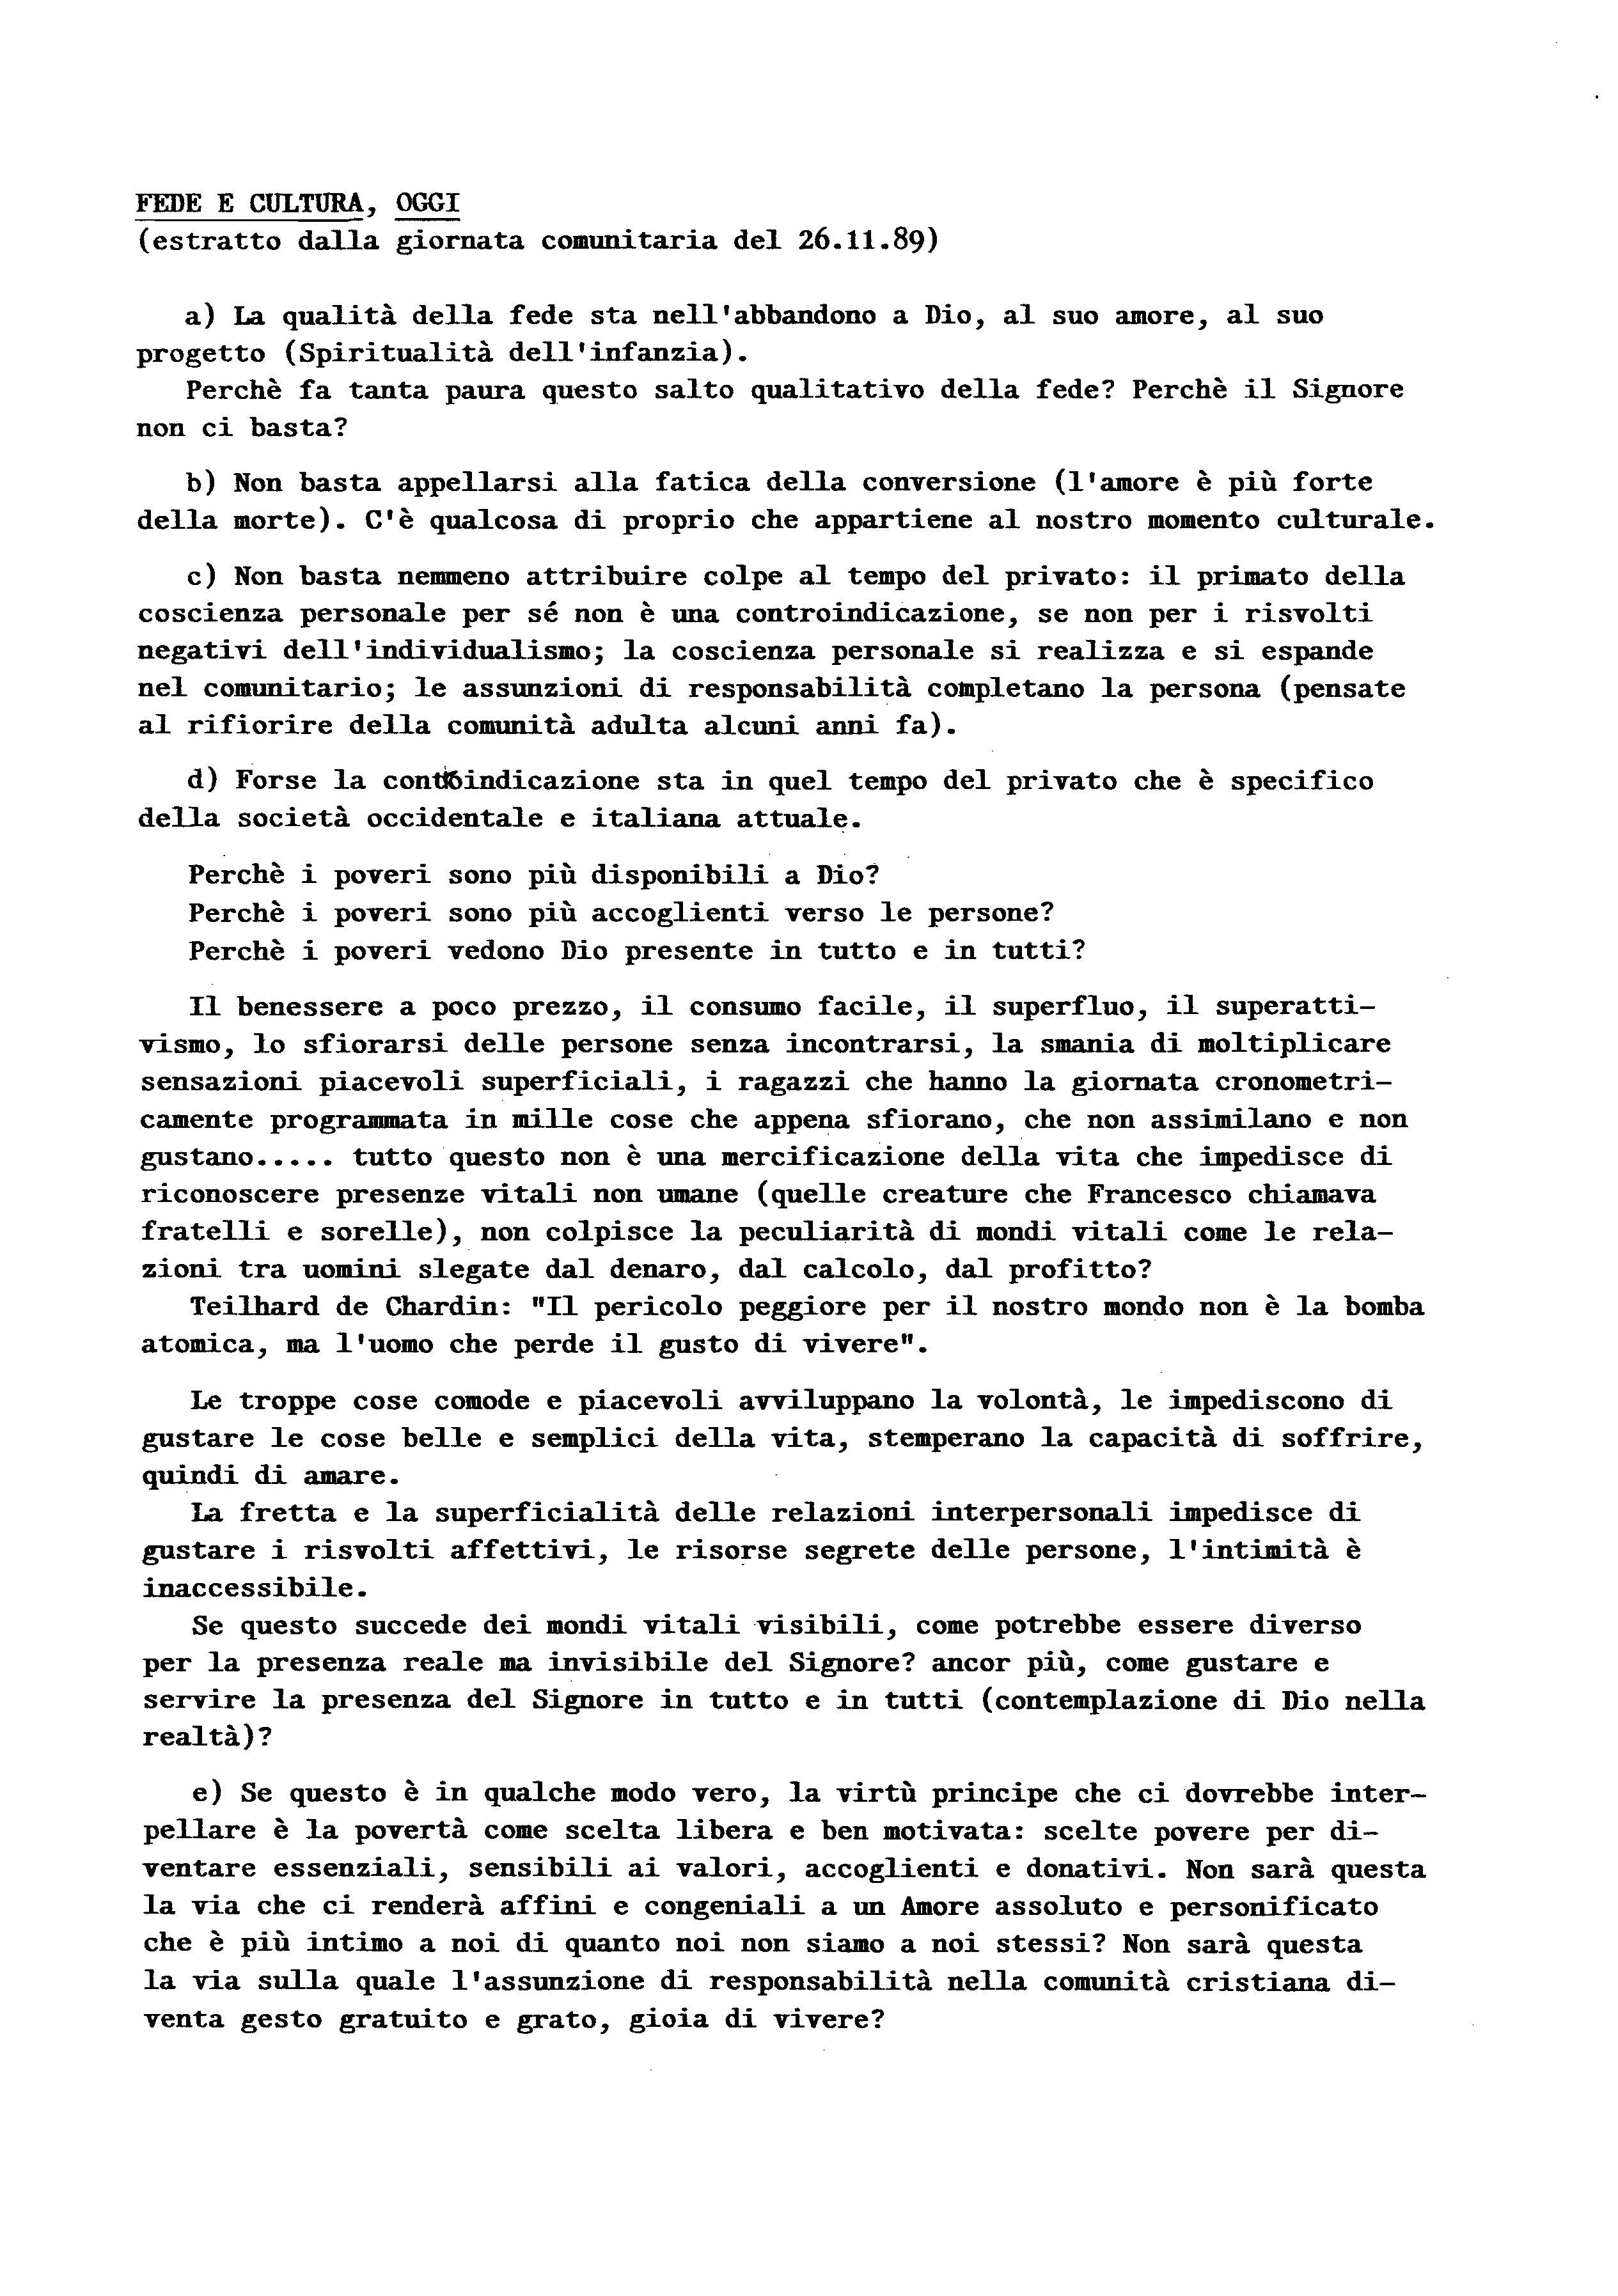 Incontro_Catechisti_Fede_e_coltura_oggi_1990.pdf